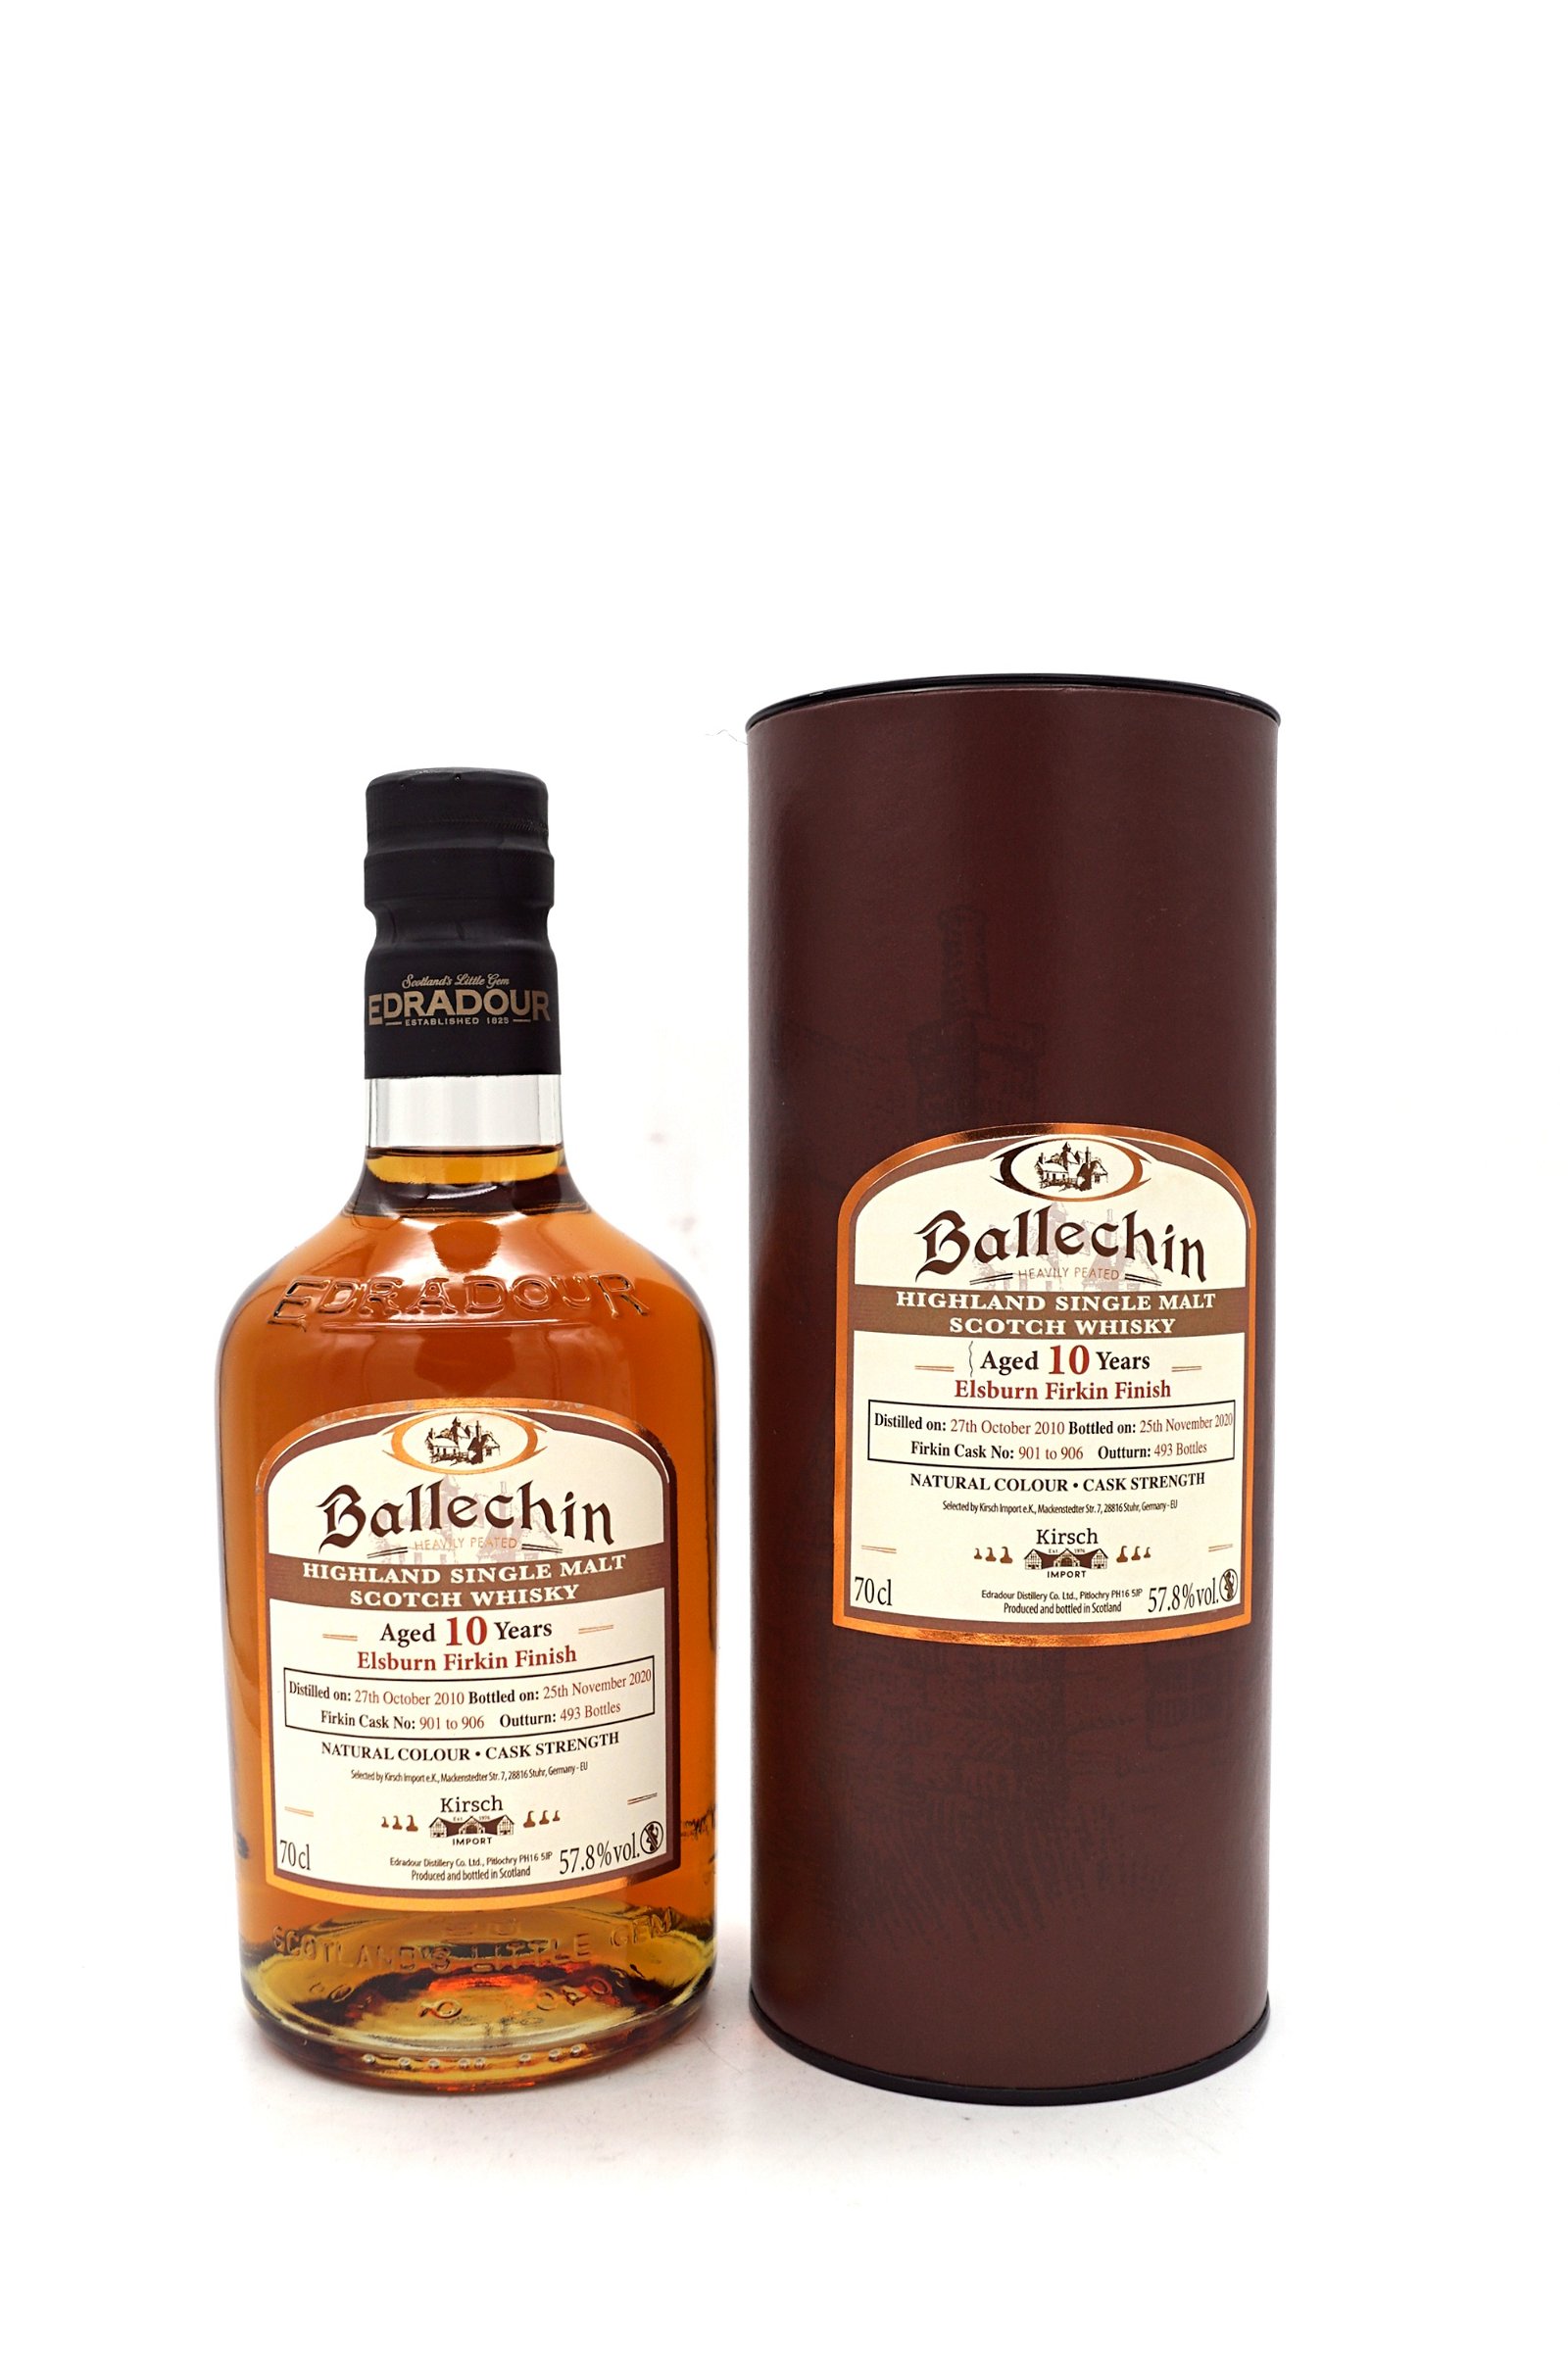 Edradour Ballechin 10 Jahre Elsburn Firkin Finish 2010/2020 Highland Single Malt Scotch Whisky 